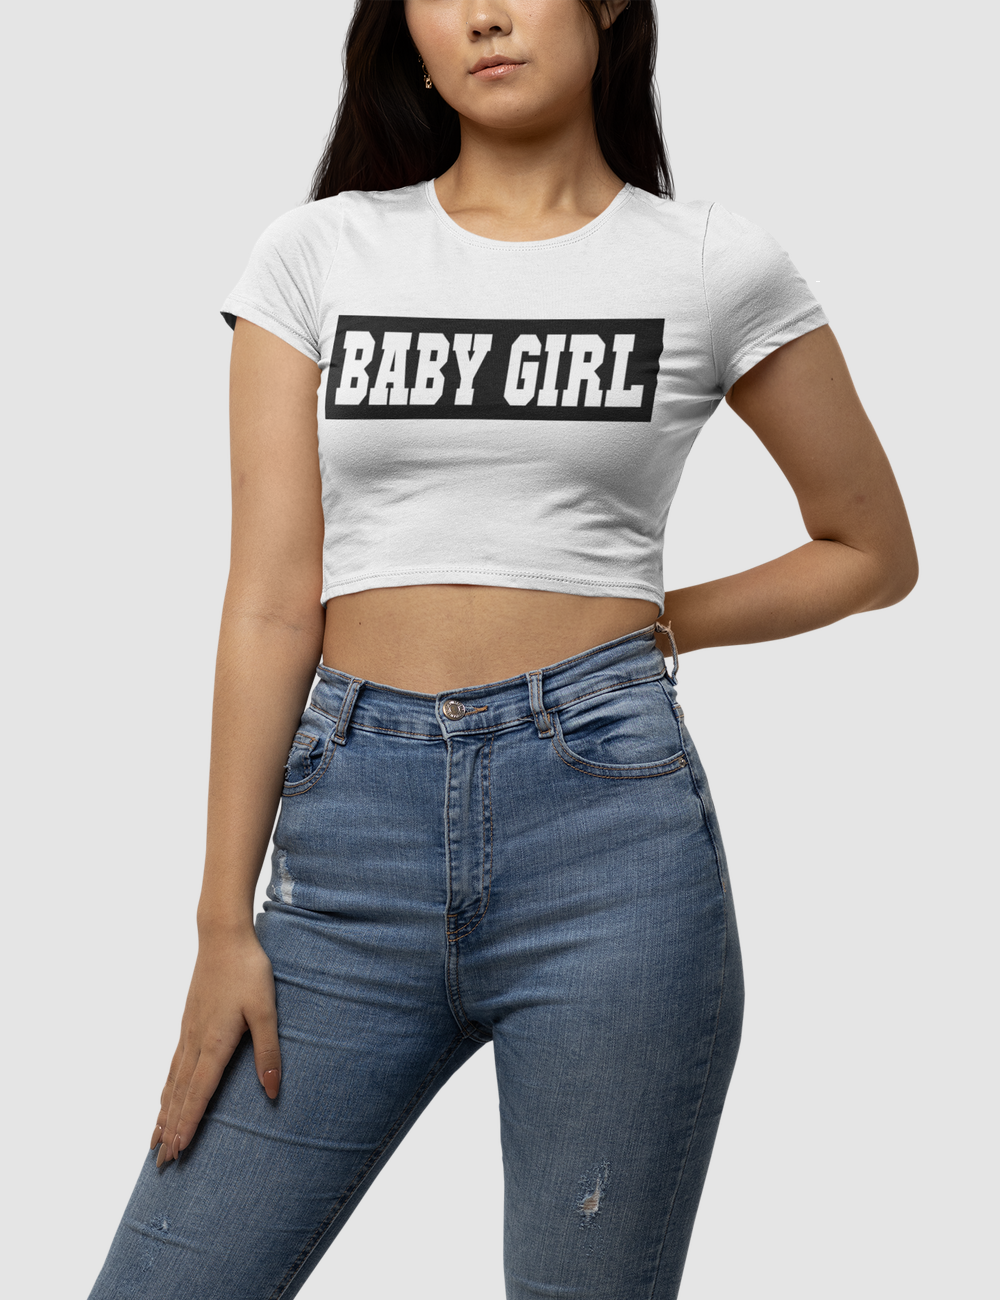 Baby Girl Women's Fitted Crop Top T-Shirt OniTakai